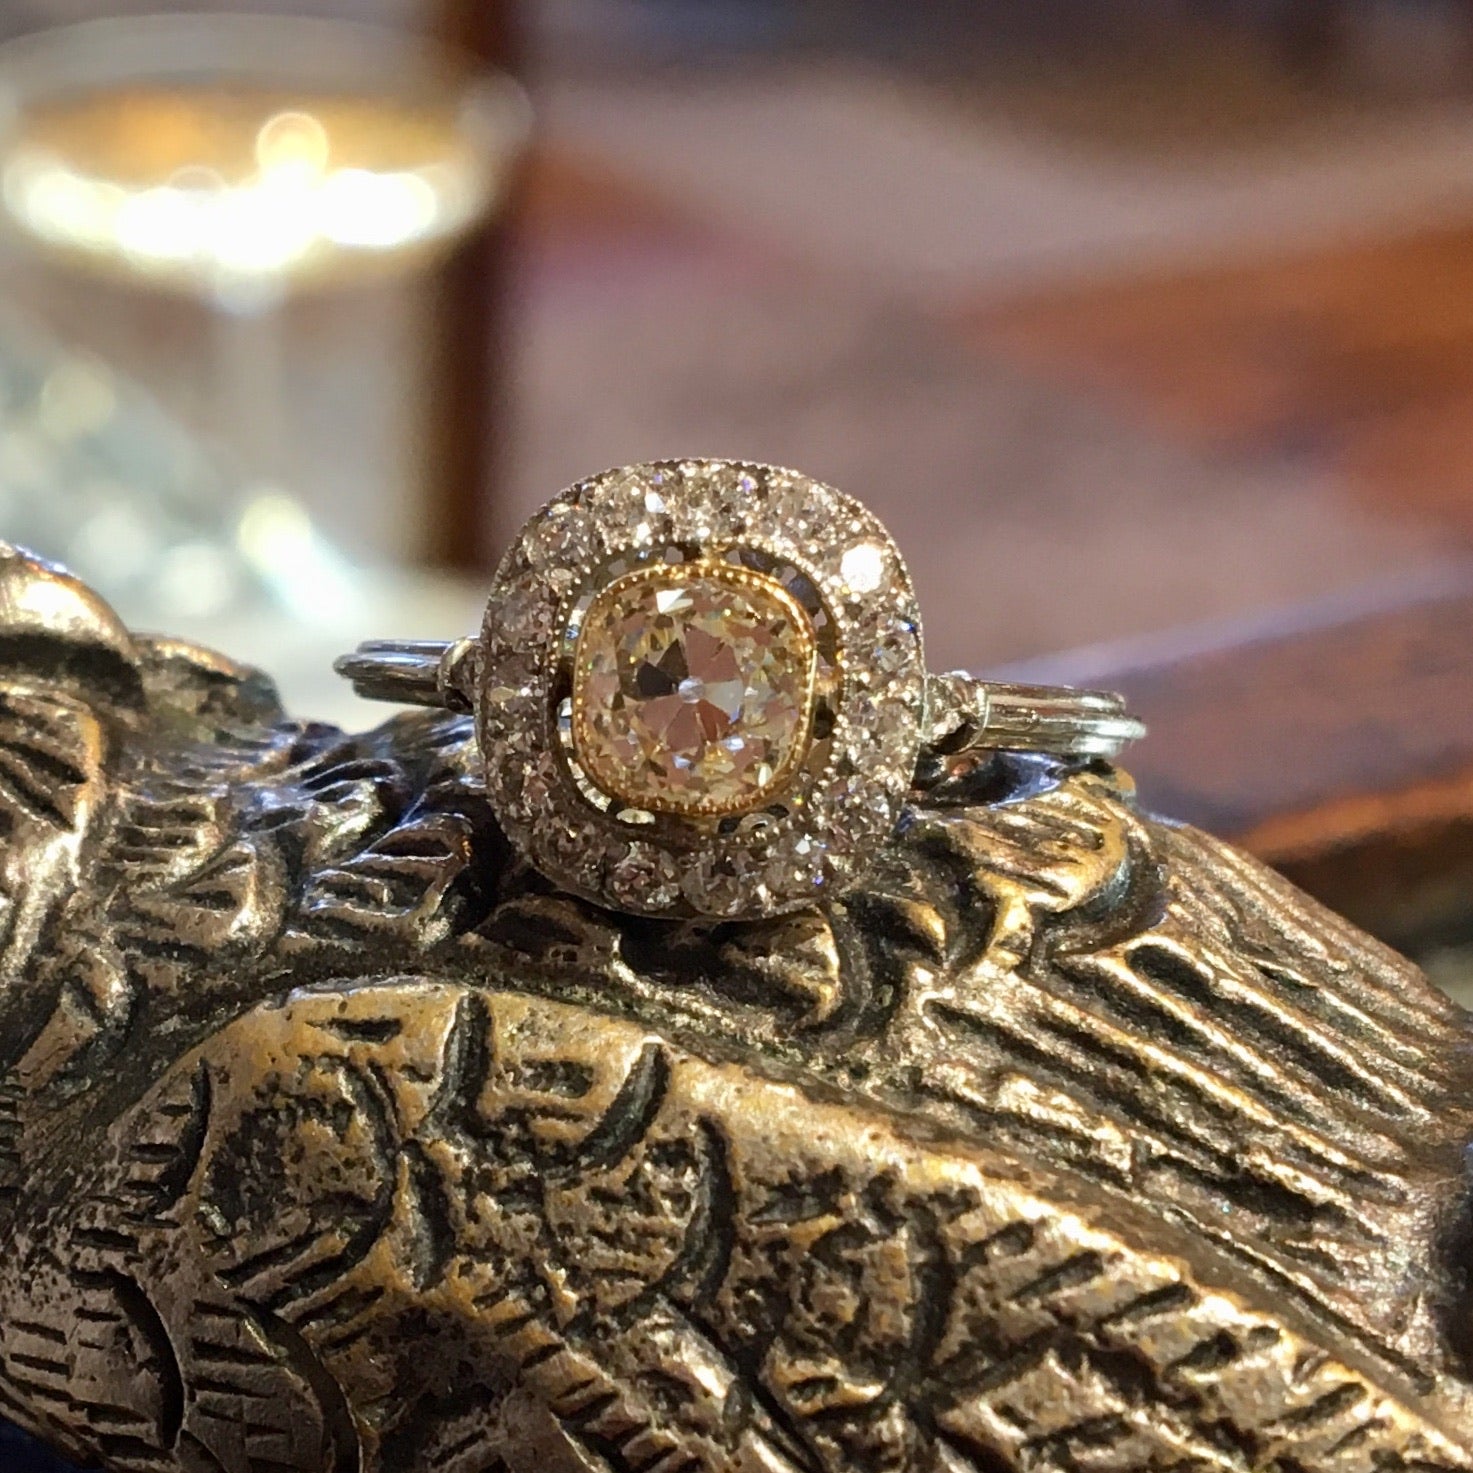 Engagement Ring Modern .72 Old Mine Cushion Cut Diamond in Platinum & 14k Rose Gold